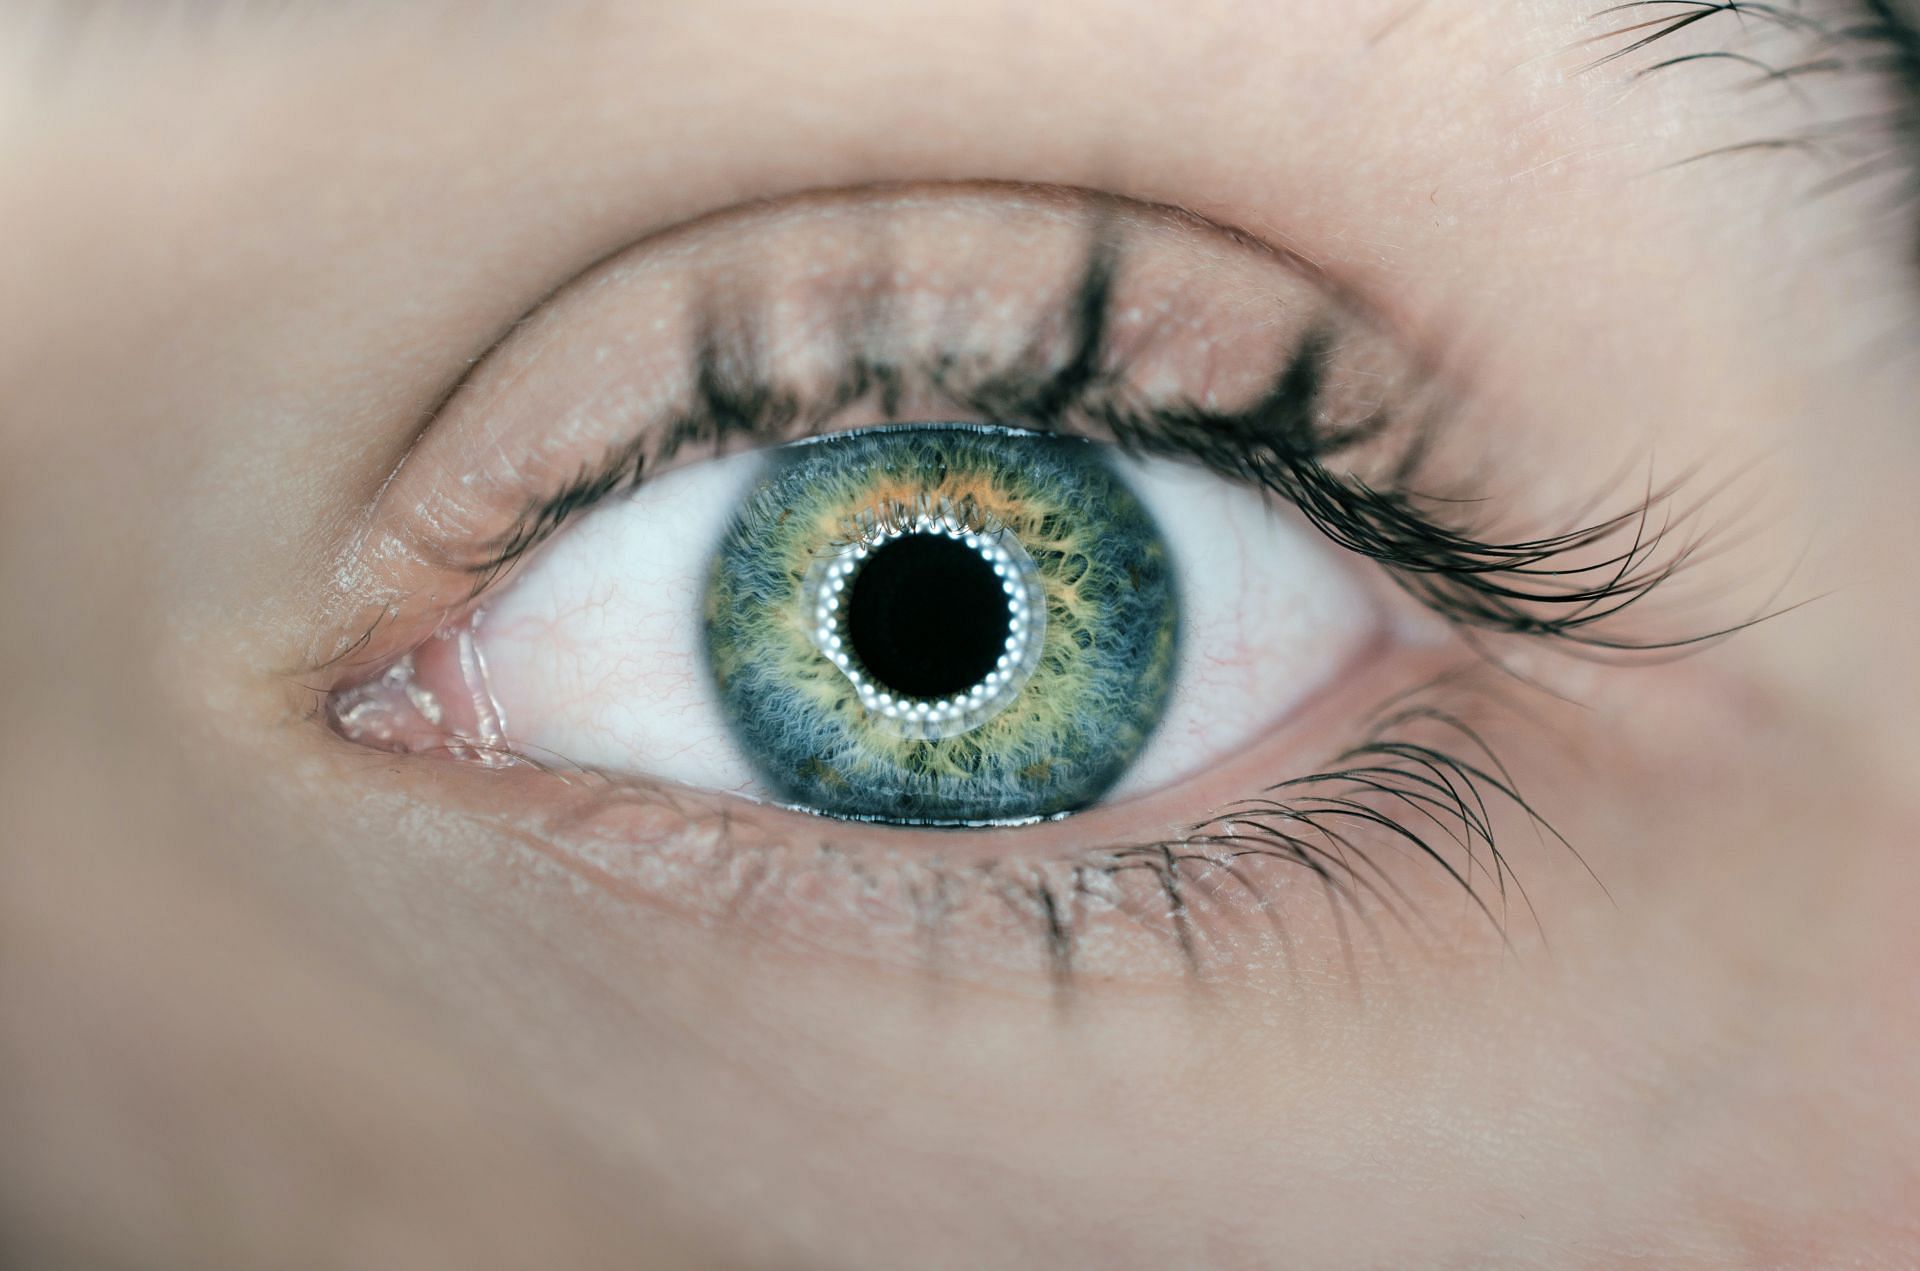 Dilated eyes (Image via Unsplash/Arteum)